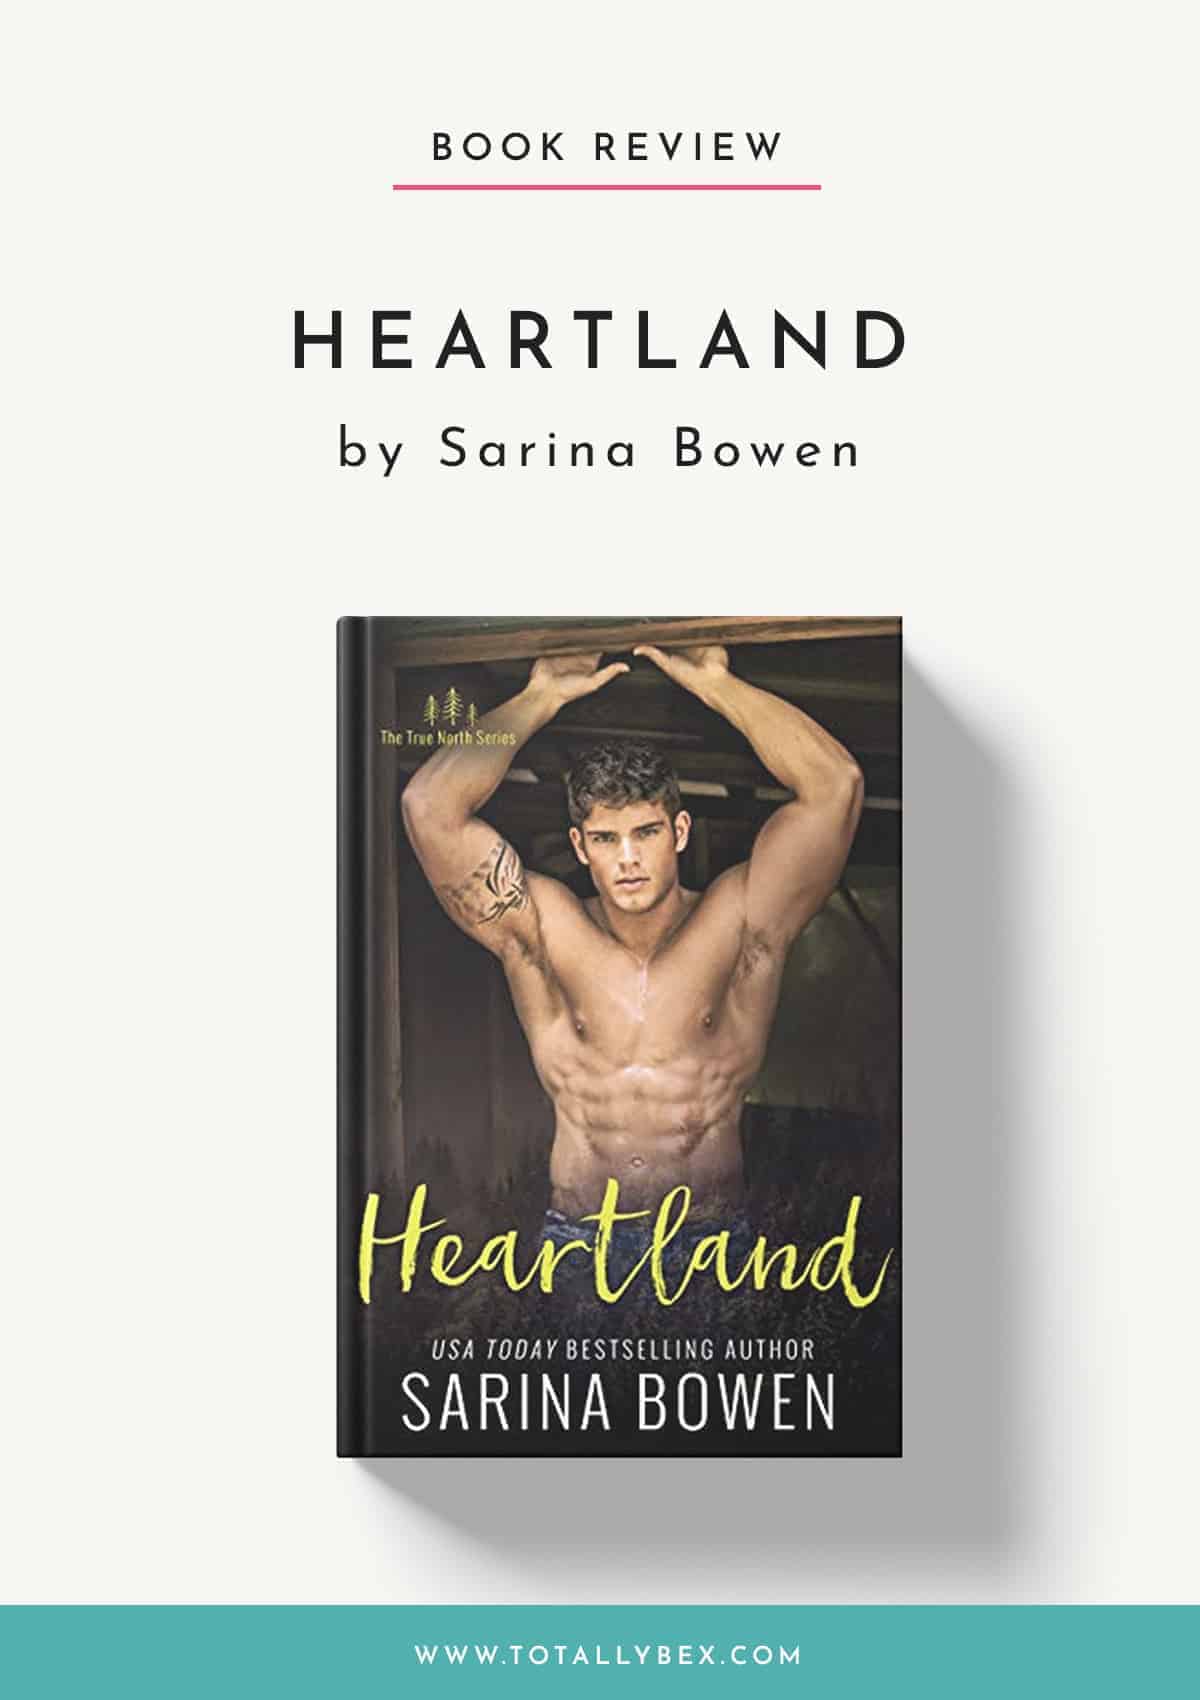 Heartland by Sarina Bowen – True North Series, Book 7